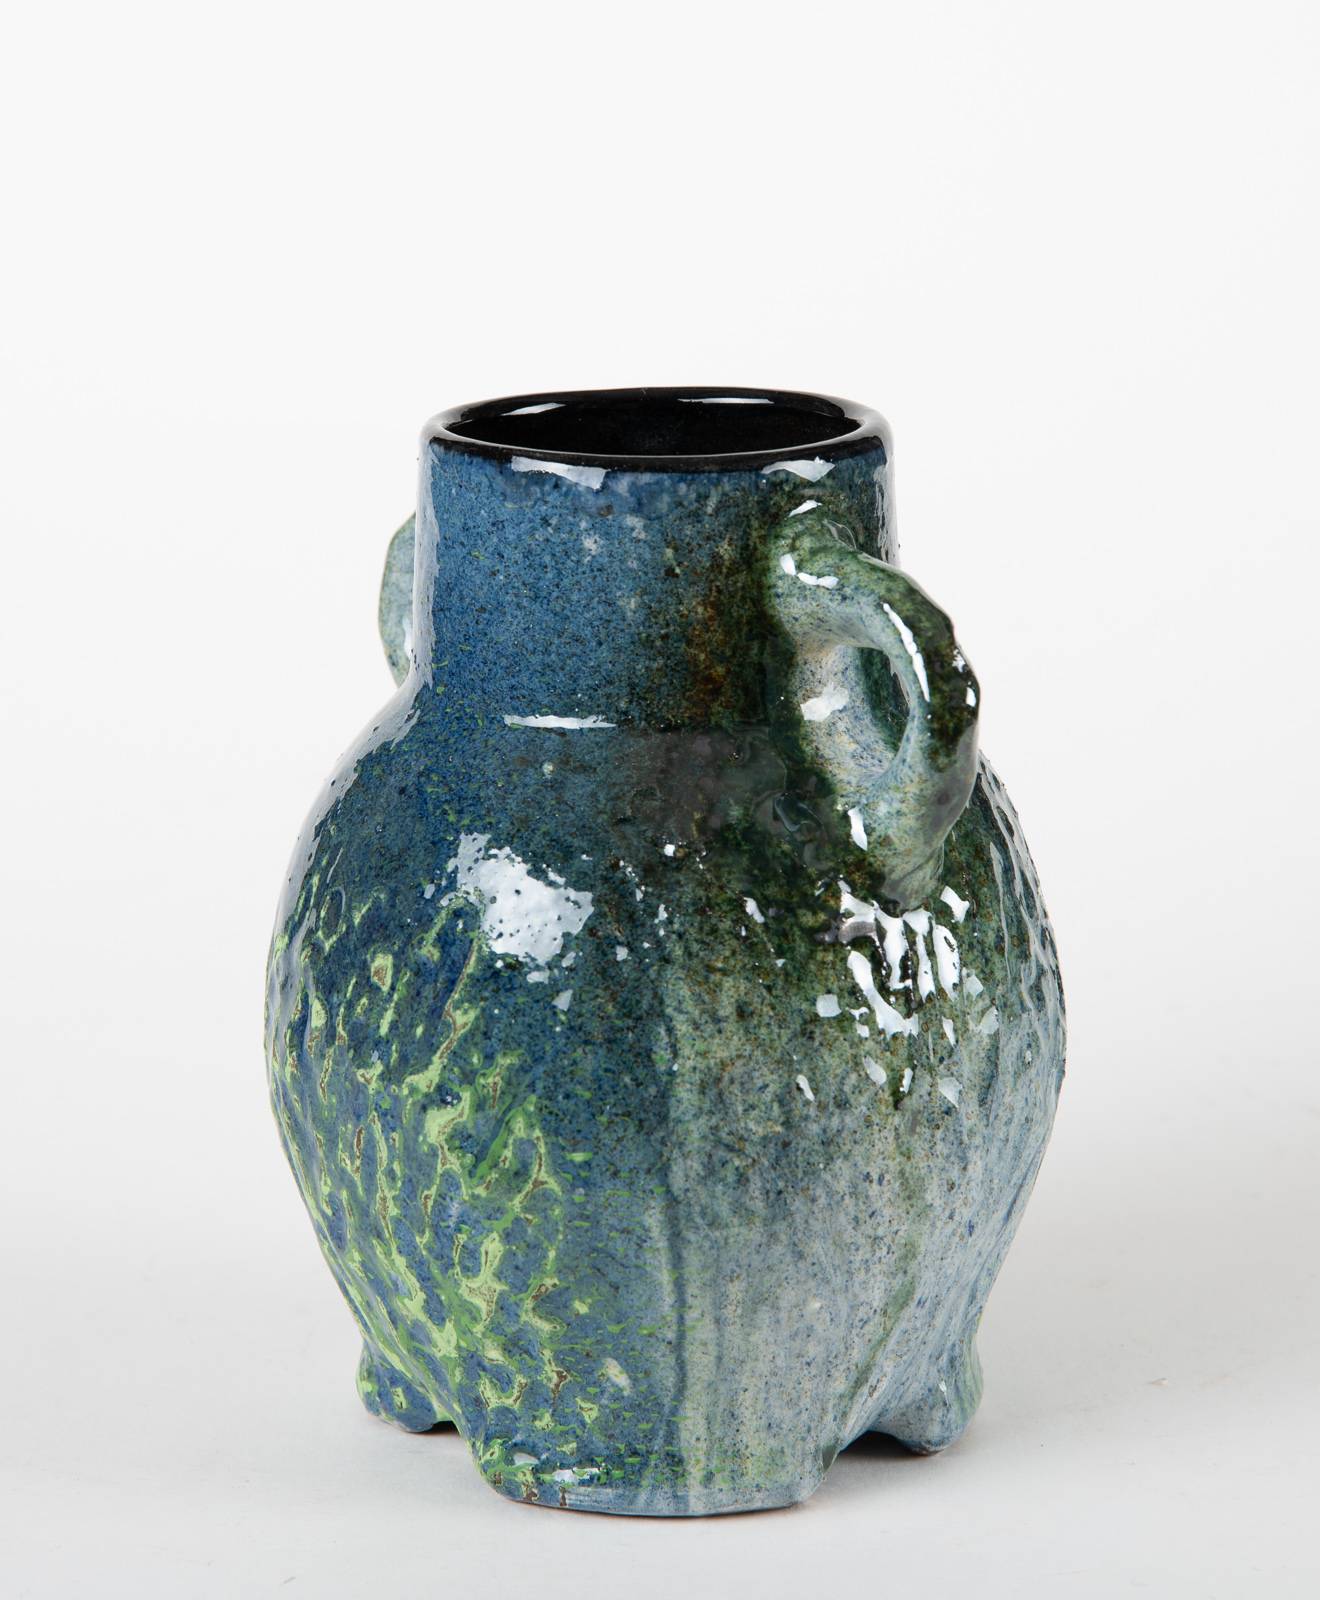 Blågrønn vase med ører (2021) — Geir Tokle